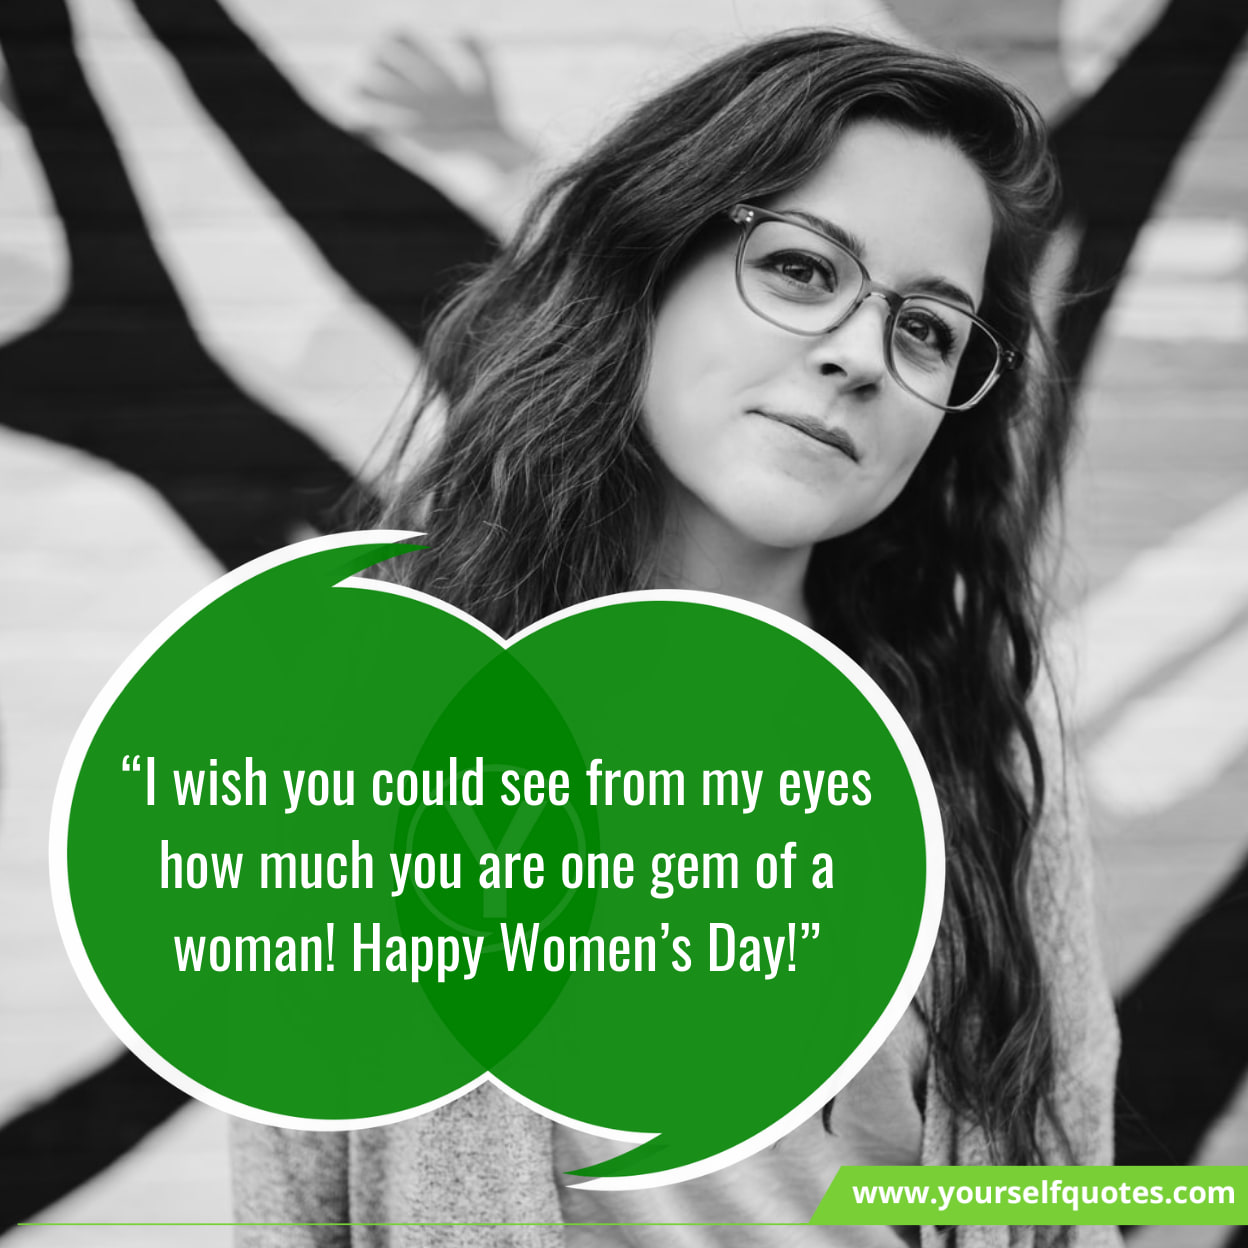 International Women’s Day Sayings & Greetings